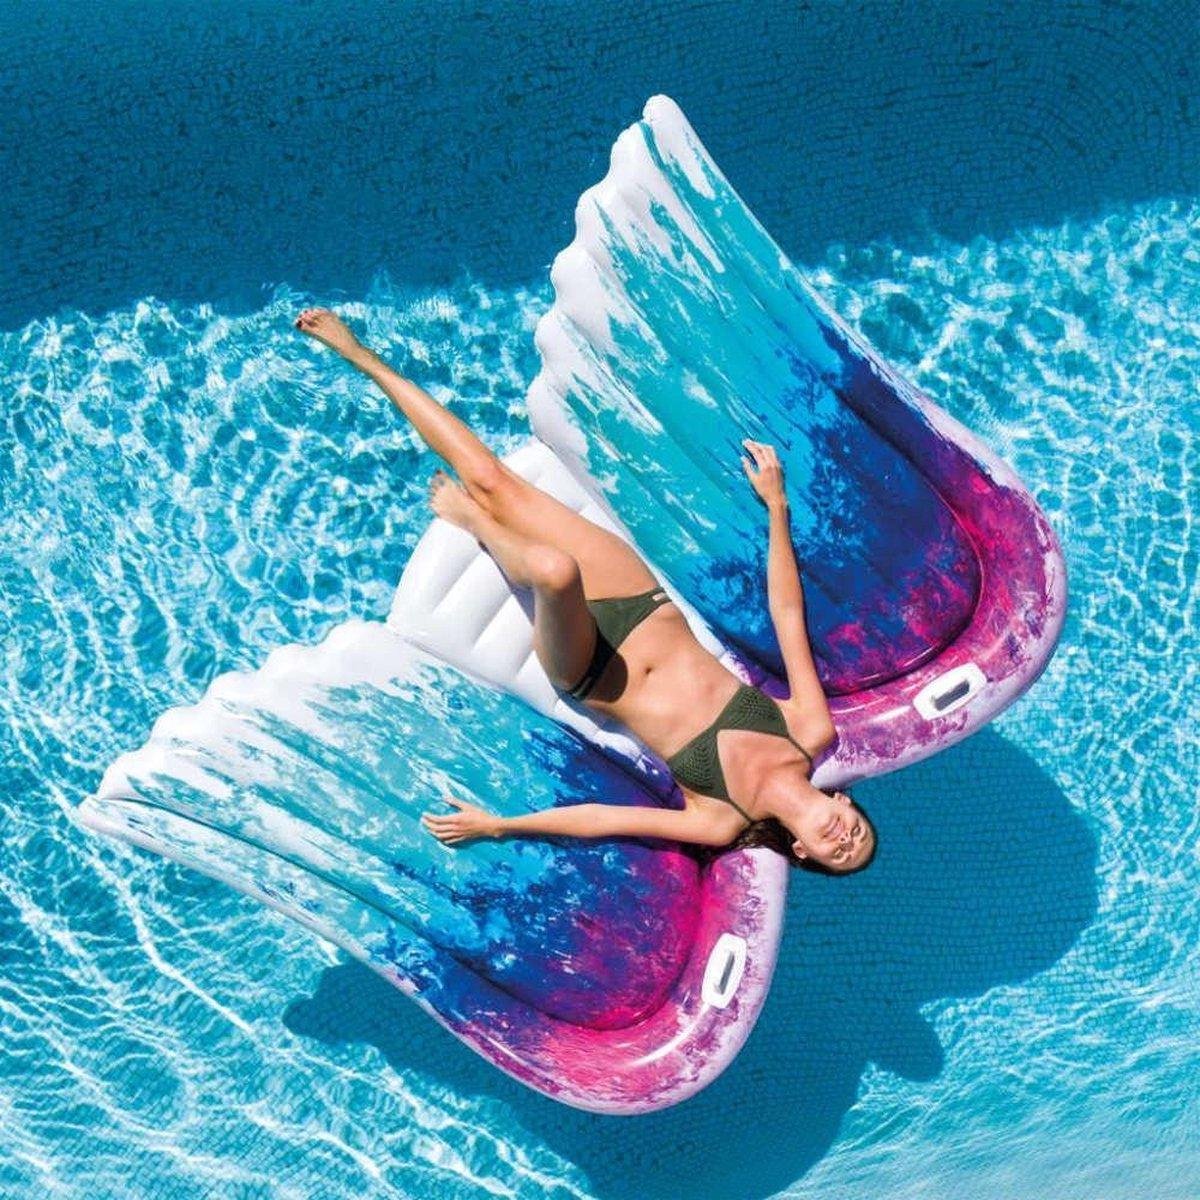 Versterker Hedendaags Maan Intex Angel Wings XXL Luchtbed 251 x 106 cm - opblaasbaar luchtmatras  zwembad | bol.com